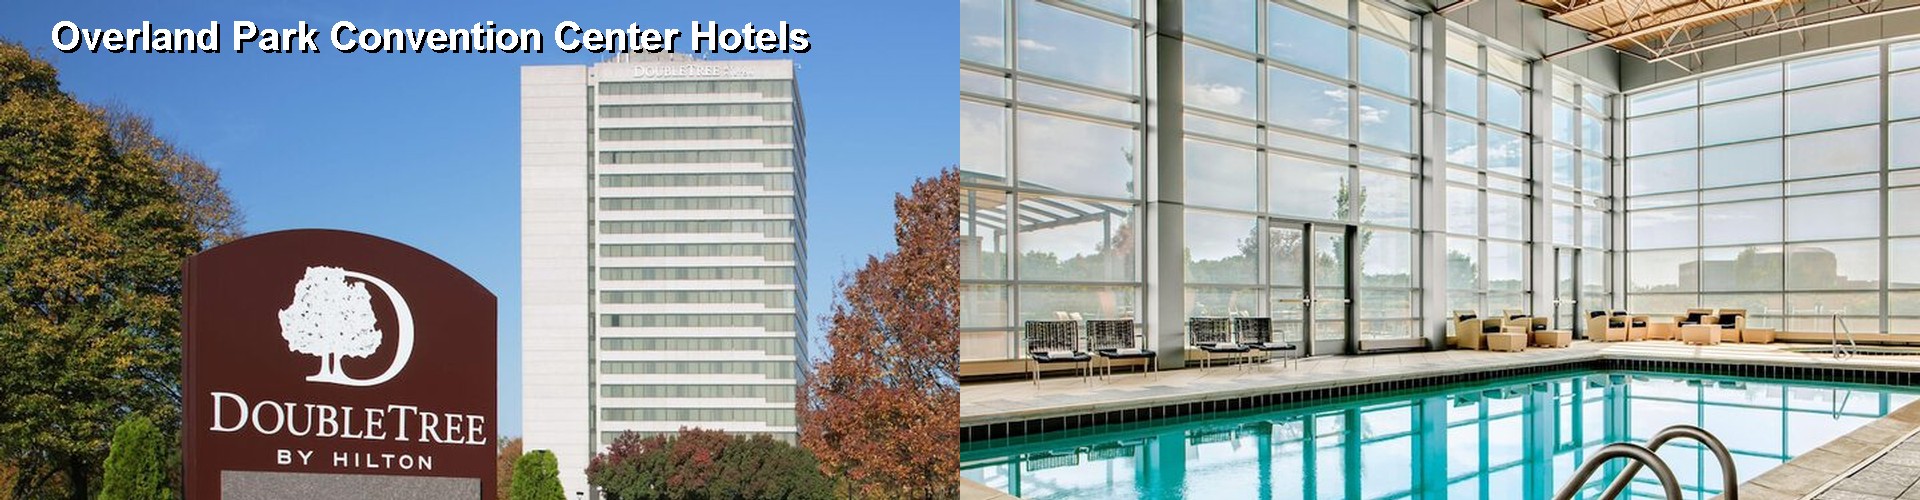 5 Best Hotels near Overland Park Convention Center